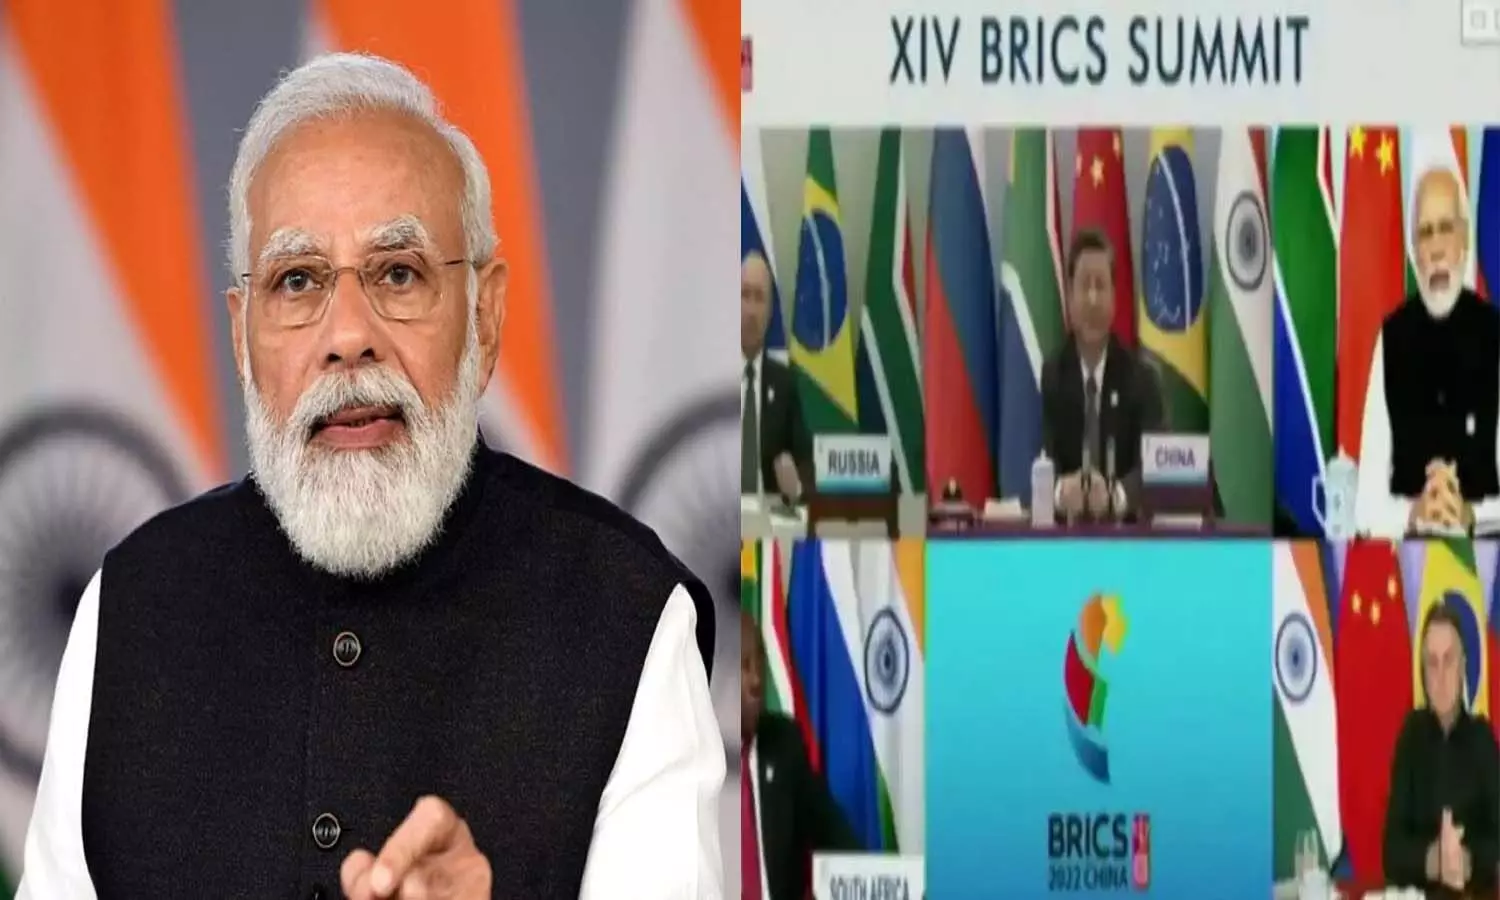 Corona affected the global economy in BRICS Summit, PM Modi said in BRICS summit